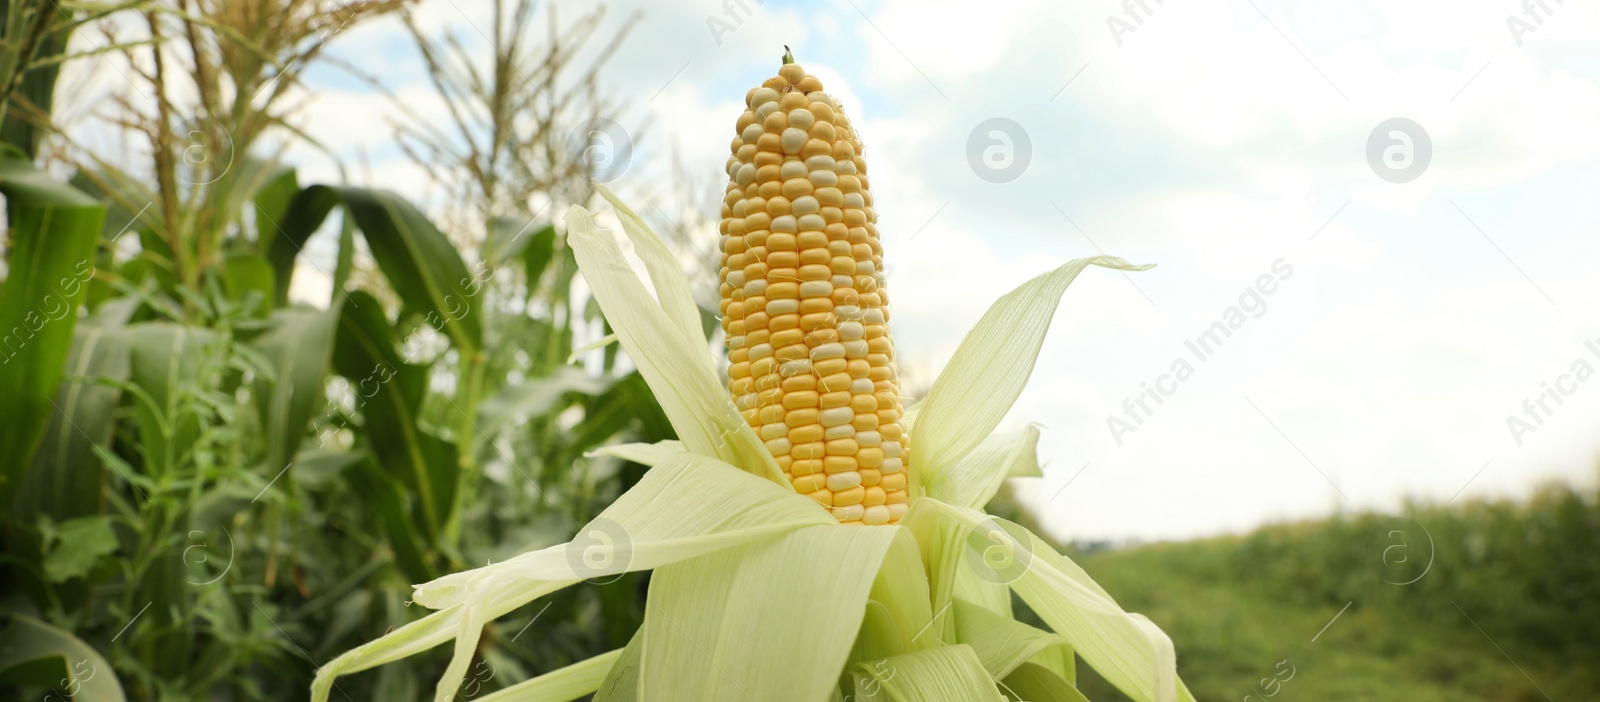 Image of Yellow ripe corn cob in field on sunny day, closeup. Banner design